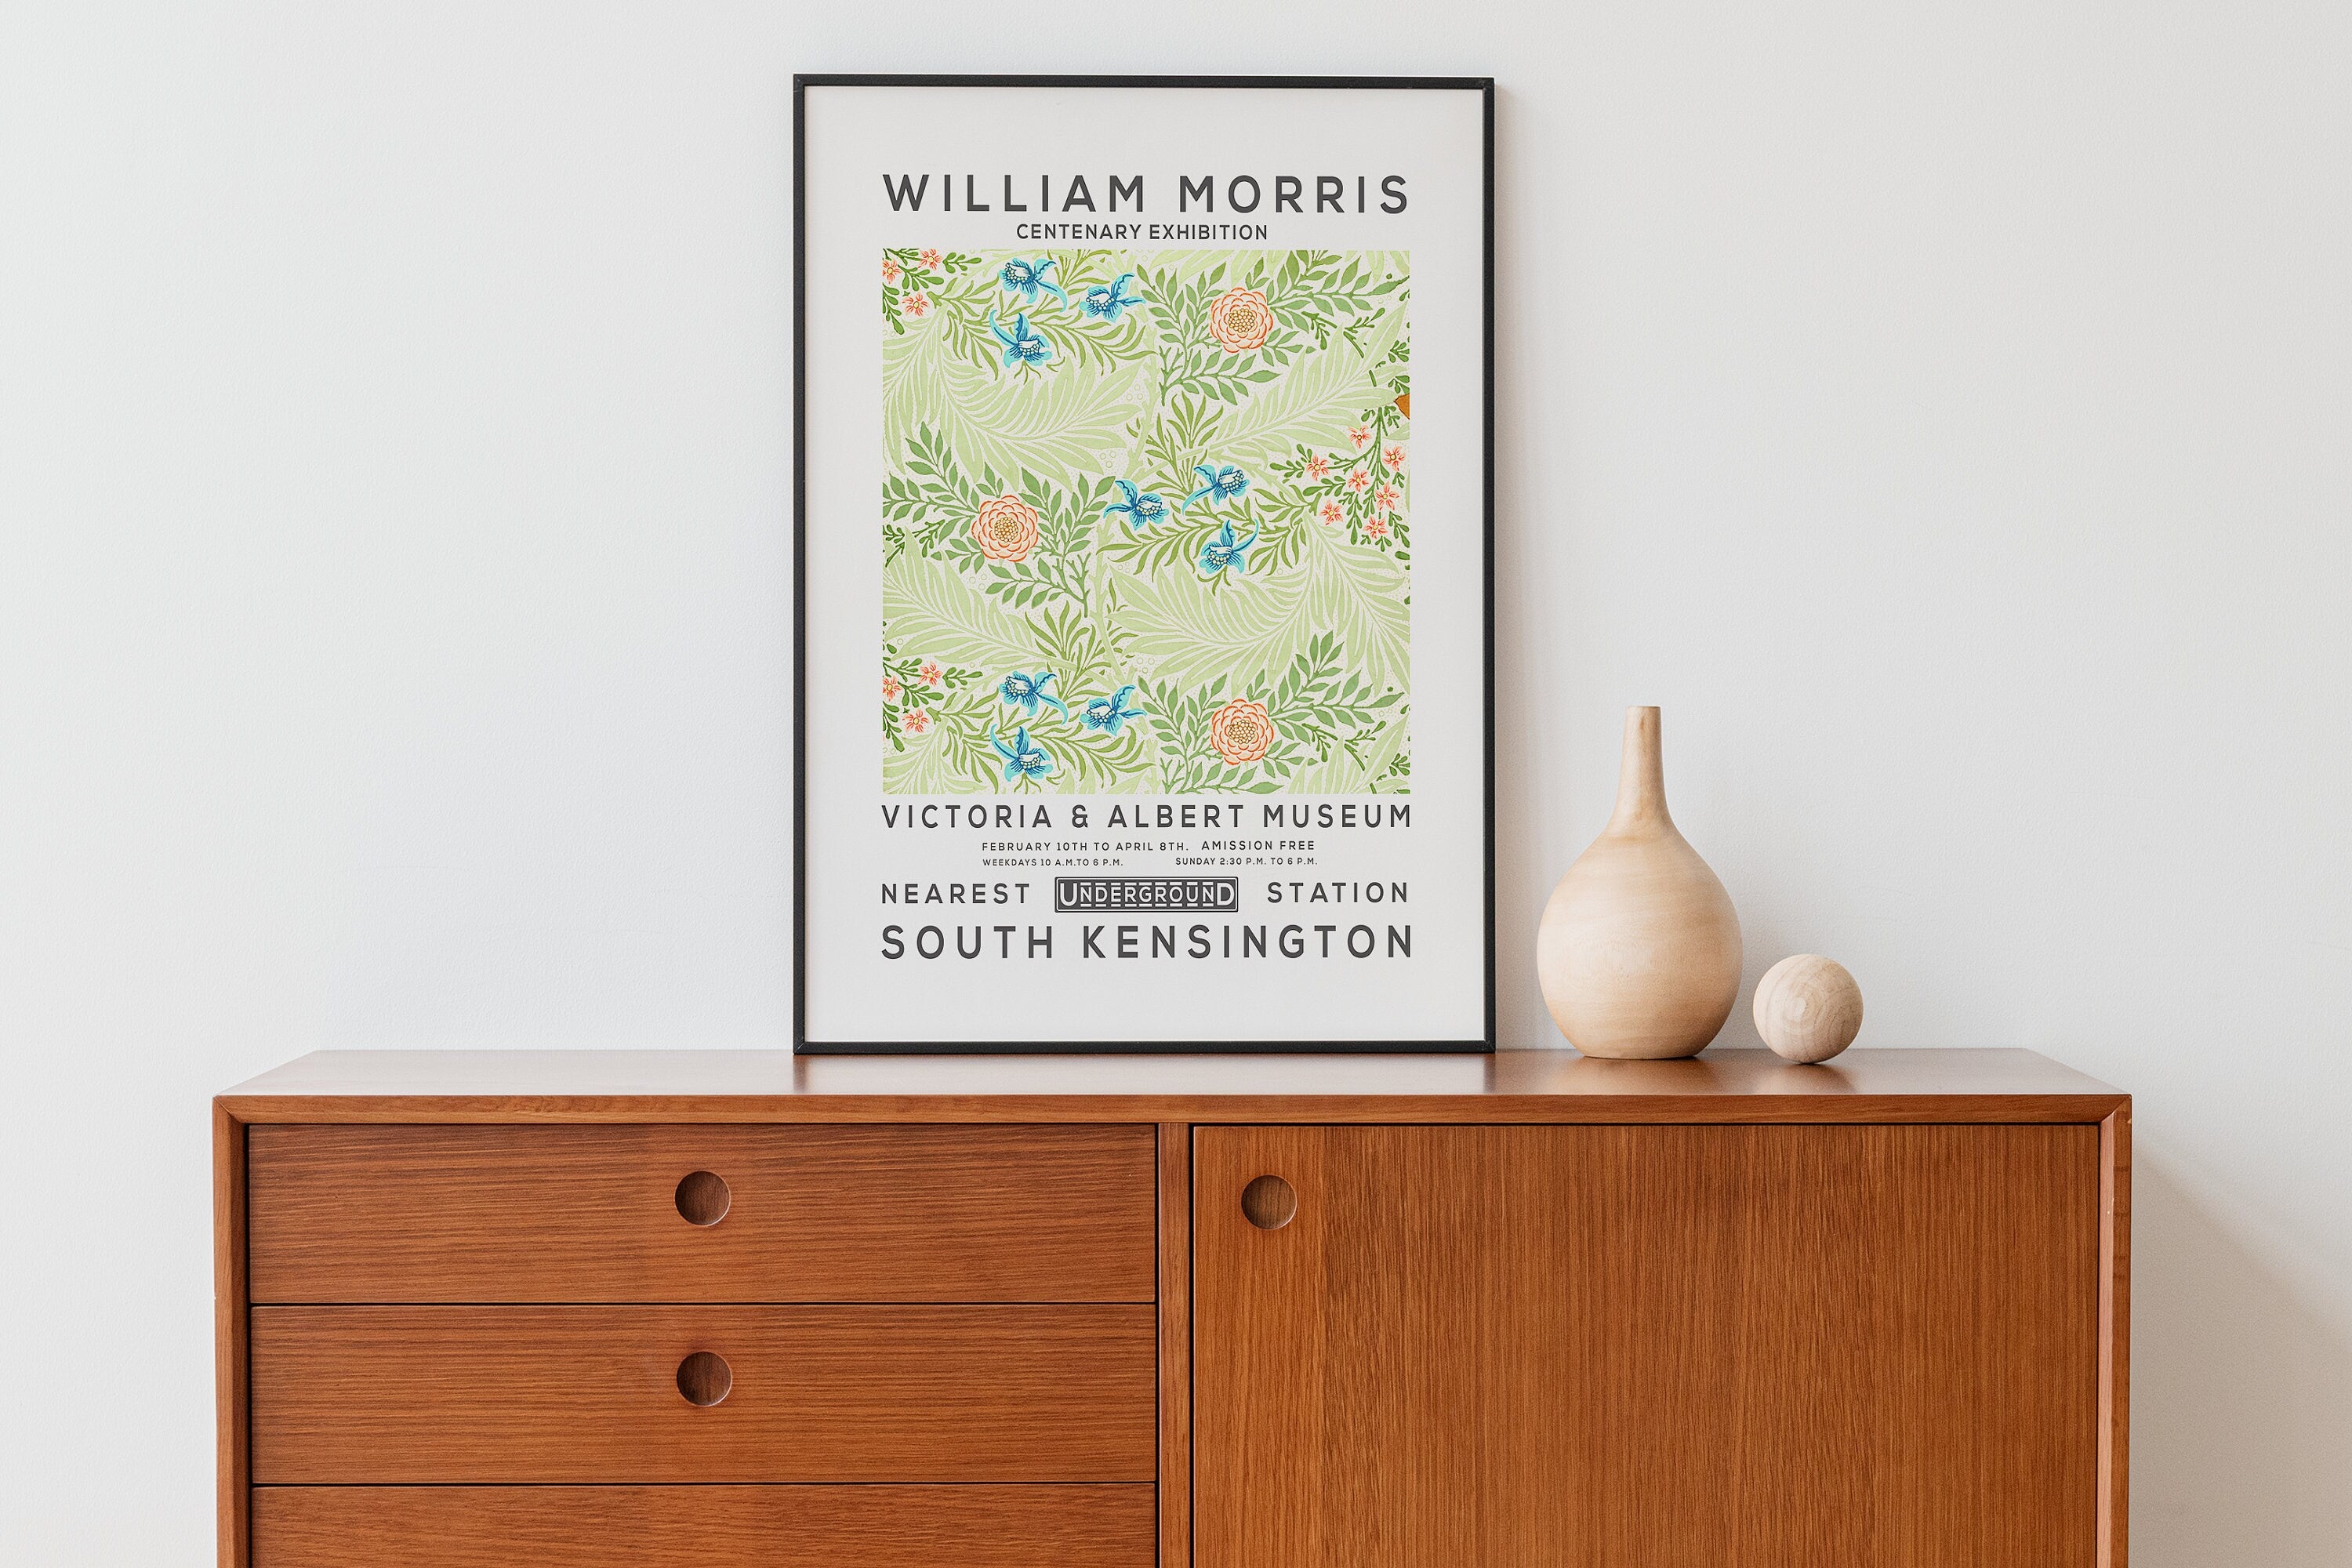 William Morris Print, Vintage Wall Decor, Exhibition Poster, Floral Wall Art, Flower Print, Home Decor, Larkspur